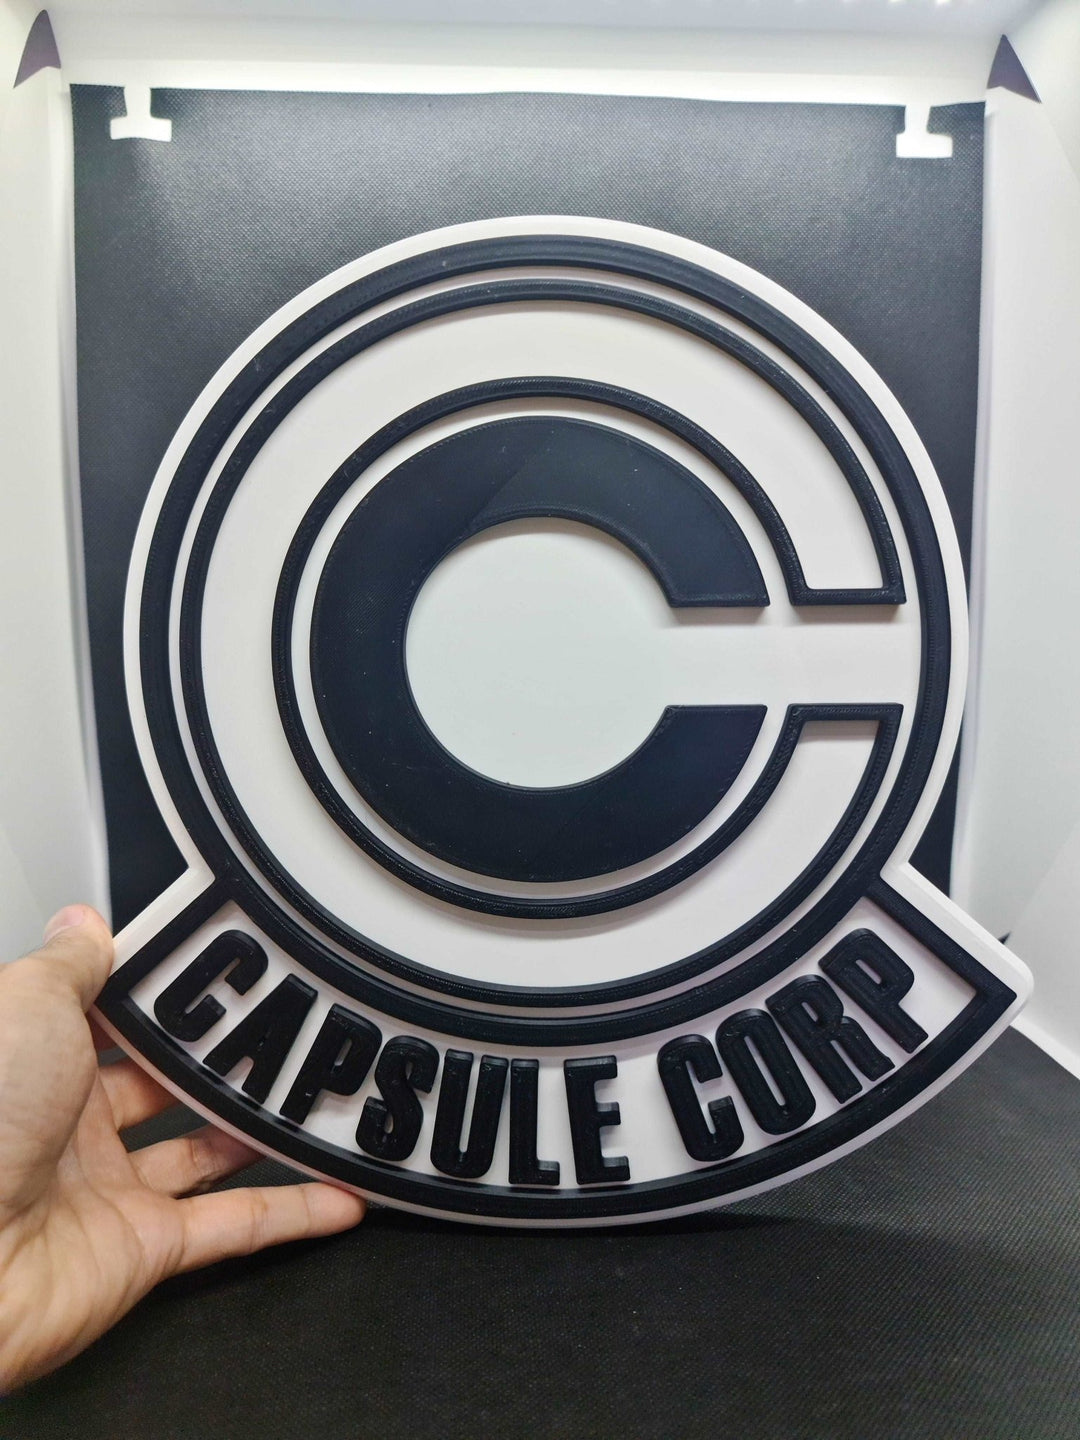 Capsule Corp. Dragon Ball Z